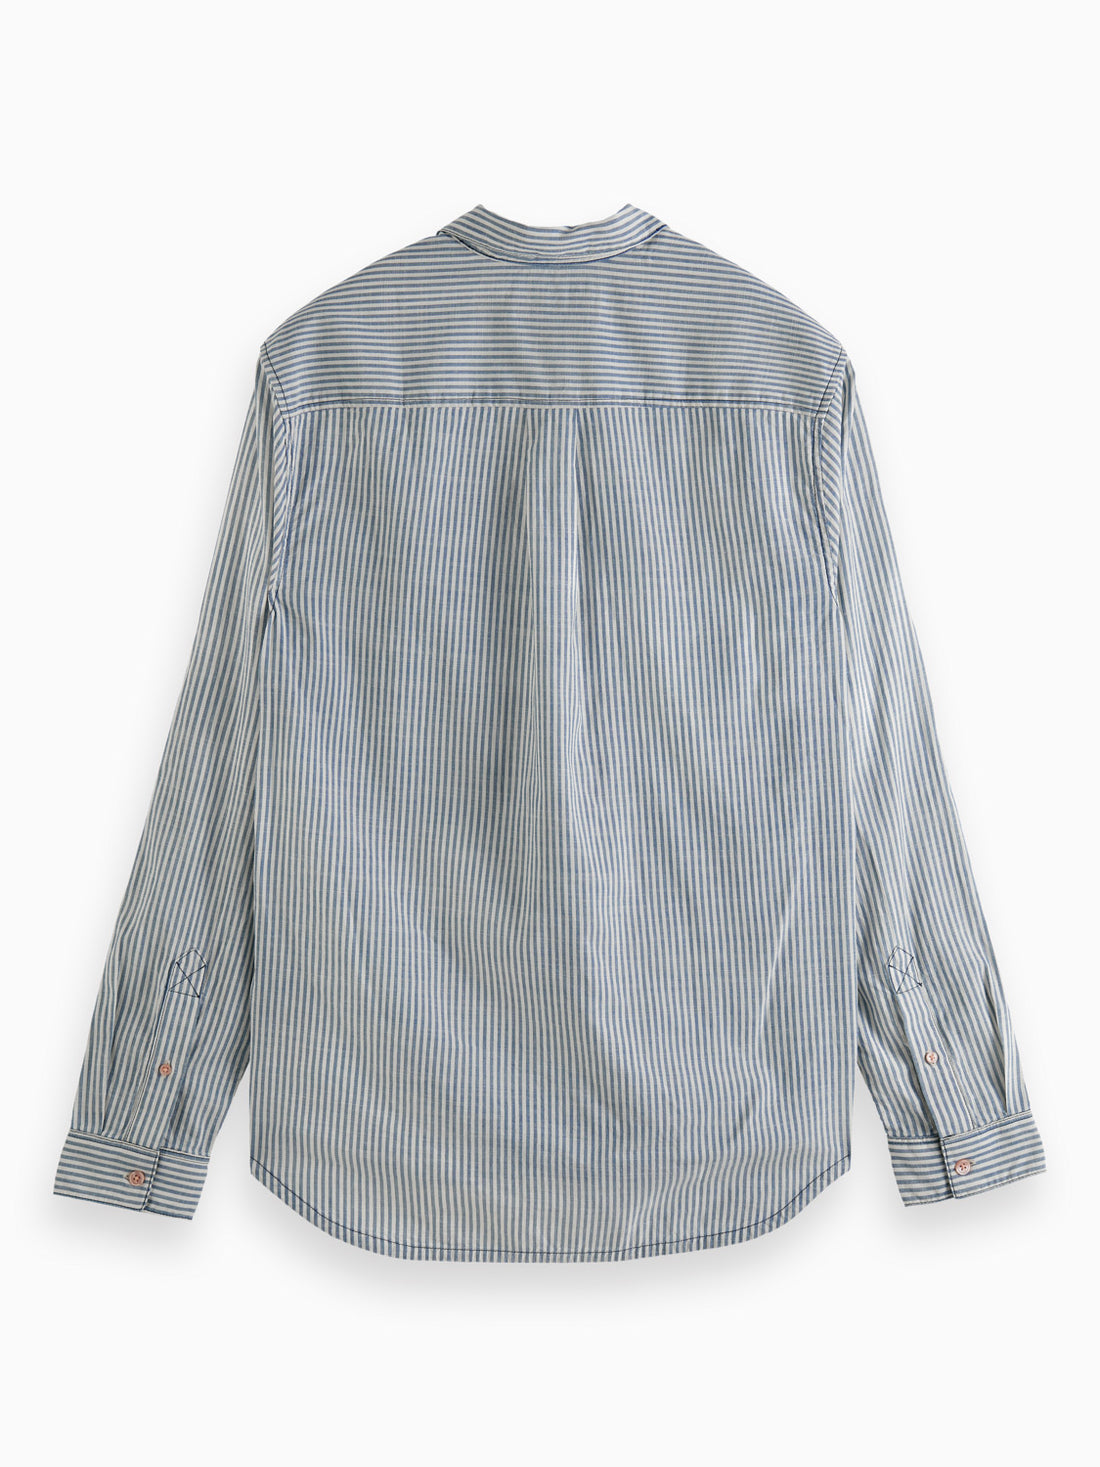 Scotch & Soda Regular Fit L/S Shirt | Indigo Striped